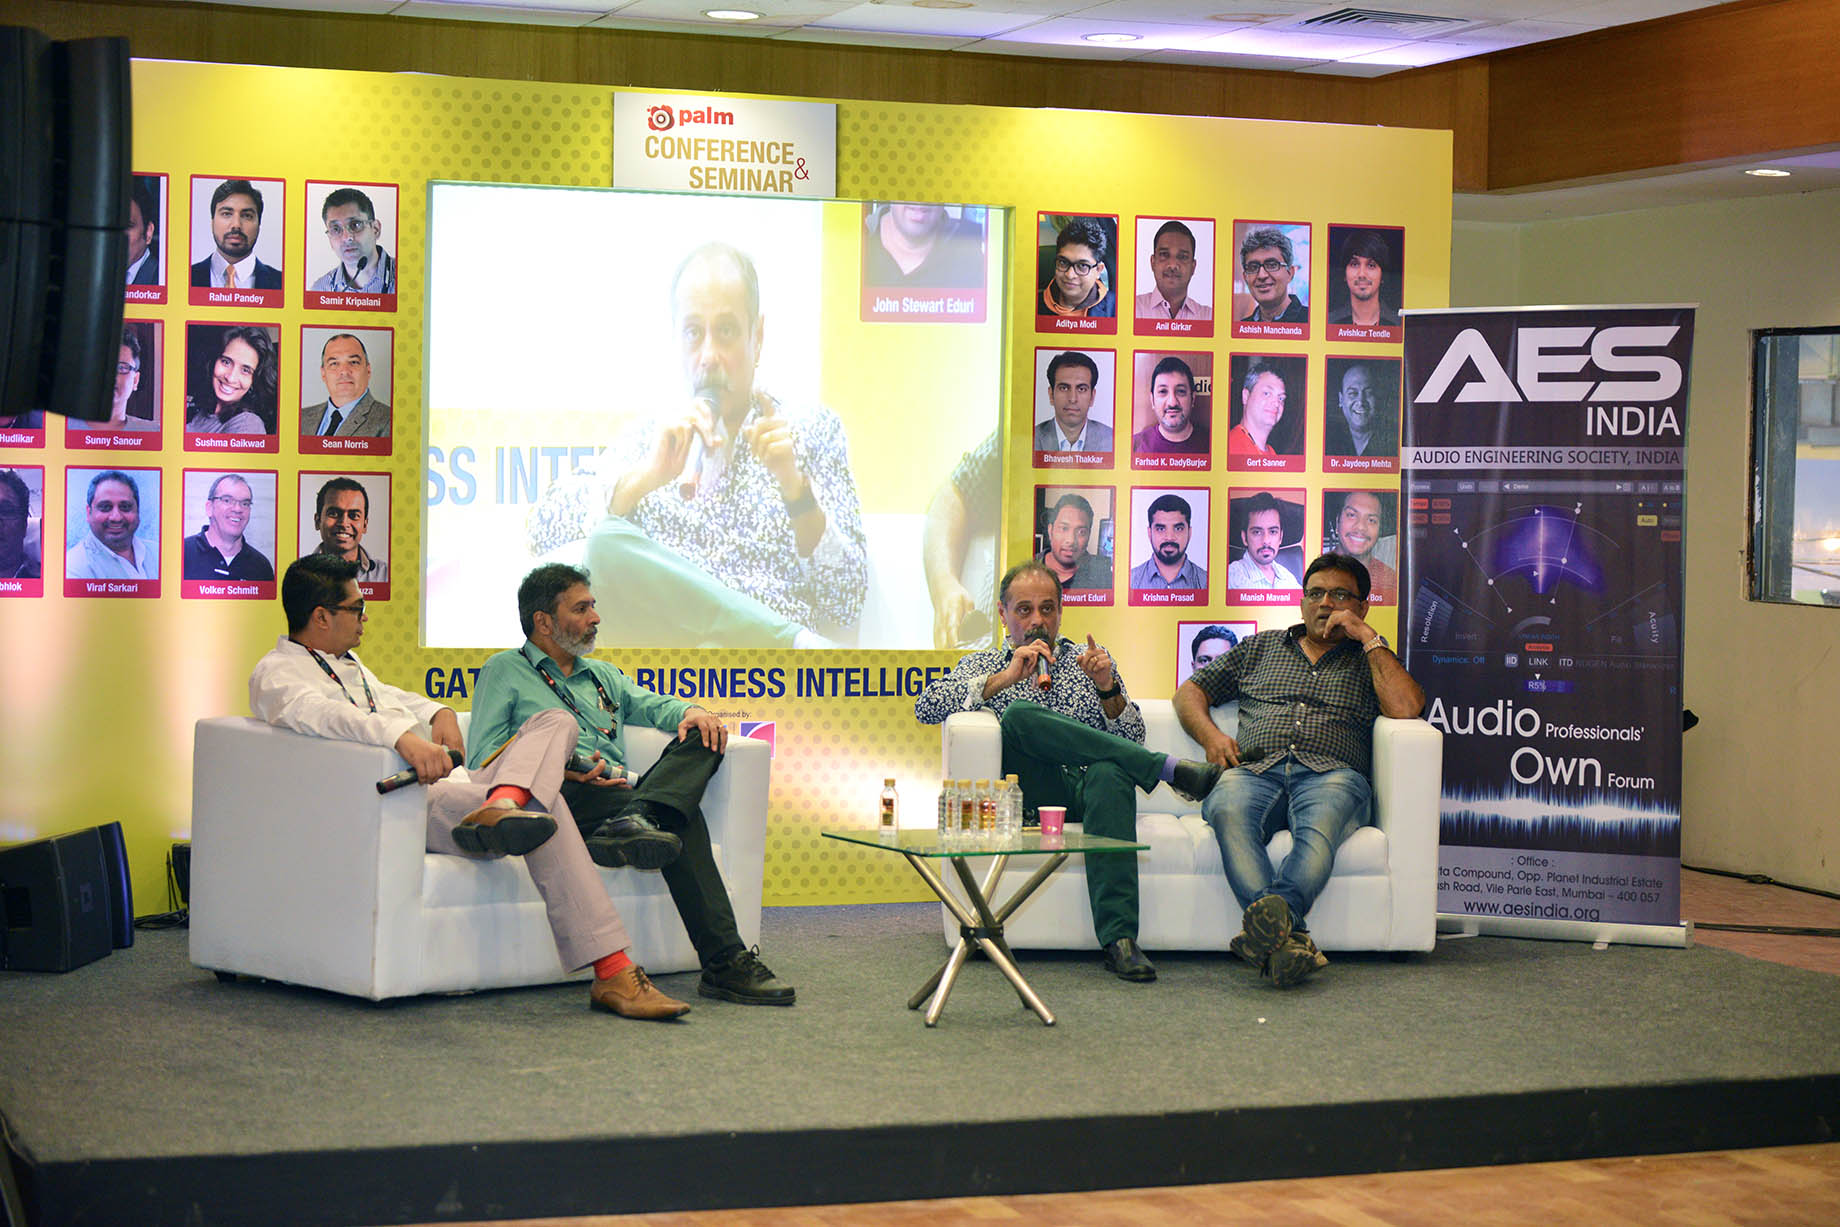 (From Left to Right) Aditya Modi, Mujeeb Dadarkar, Shantanu Hudlikar, Pramod Chandorkar at The AES INDIA PALM Open Forum for Sound Engineers